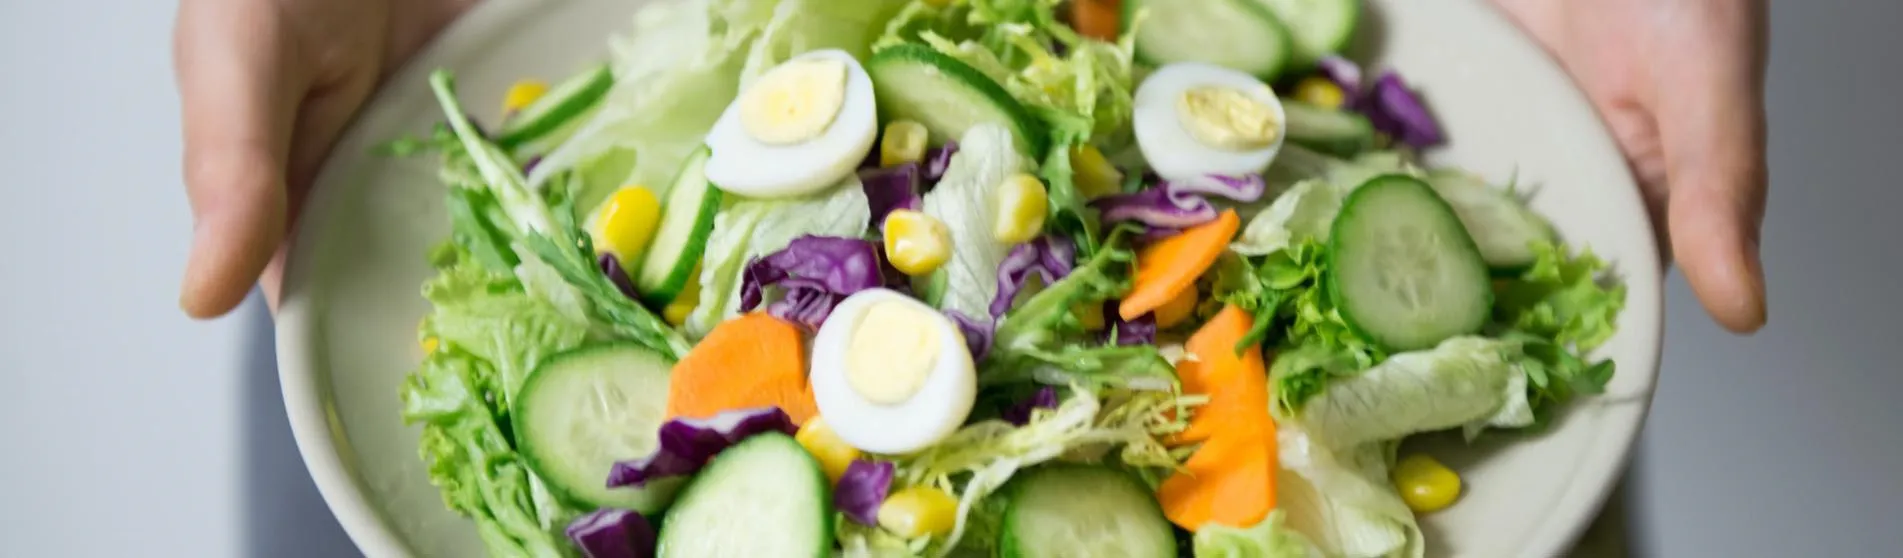 folsm-nutritional-sciences-salad-bowl